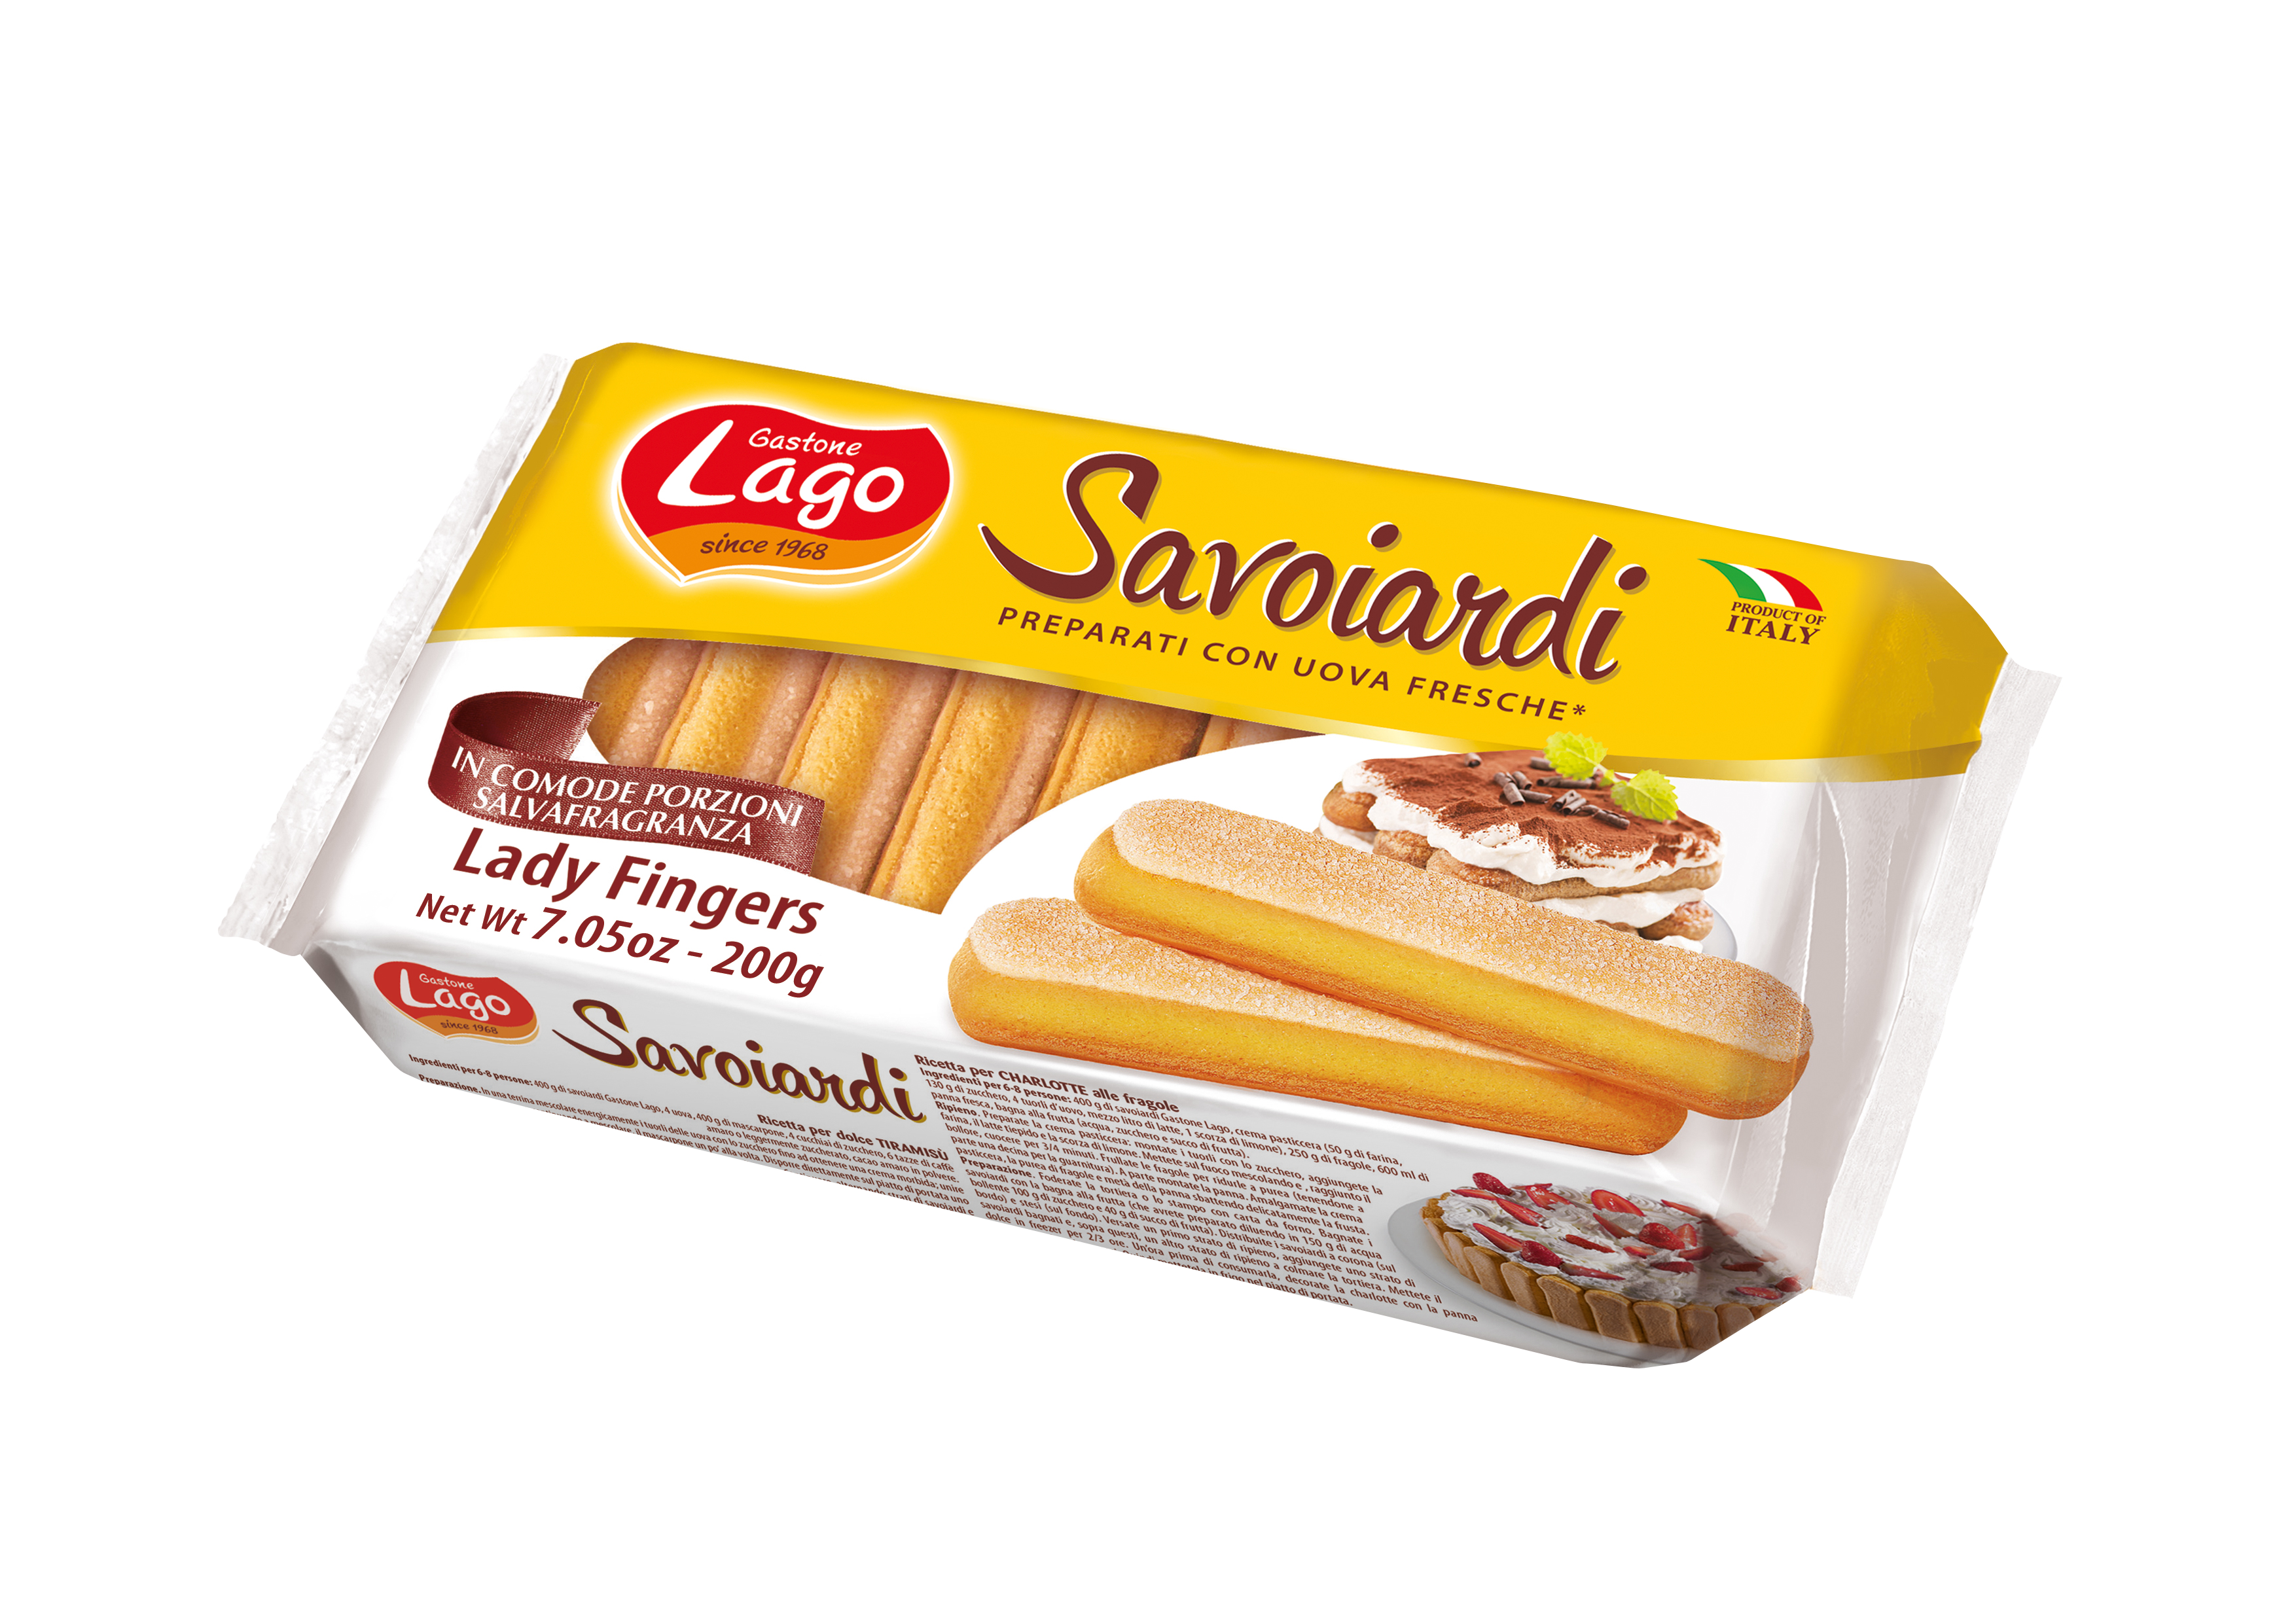 Savoiardi - Product Image